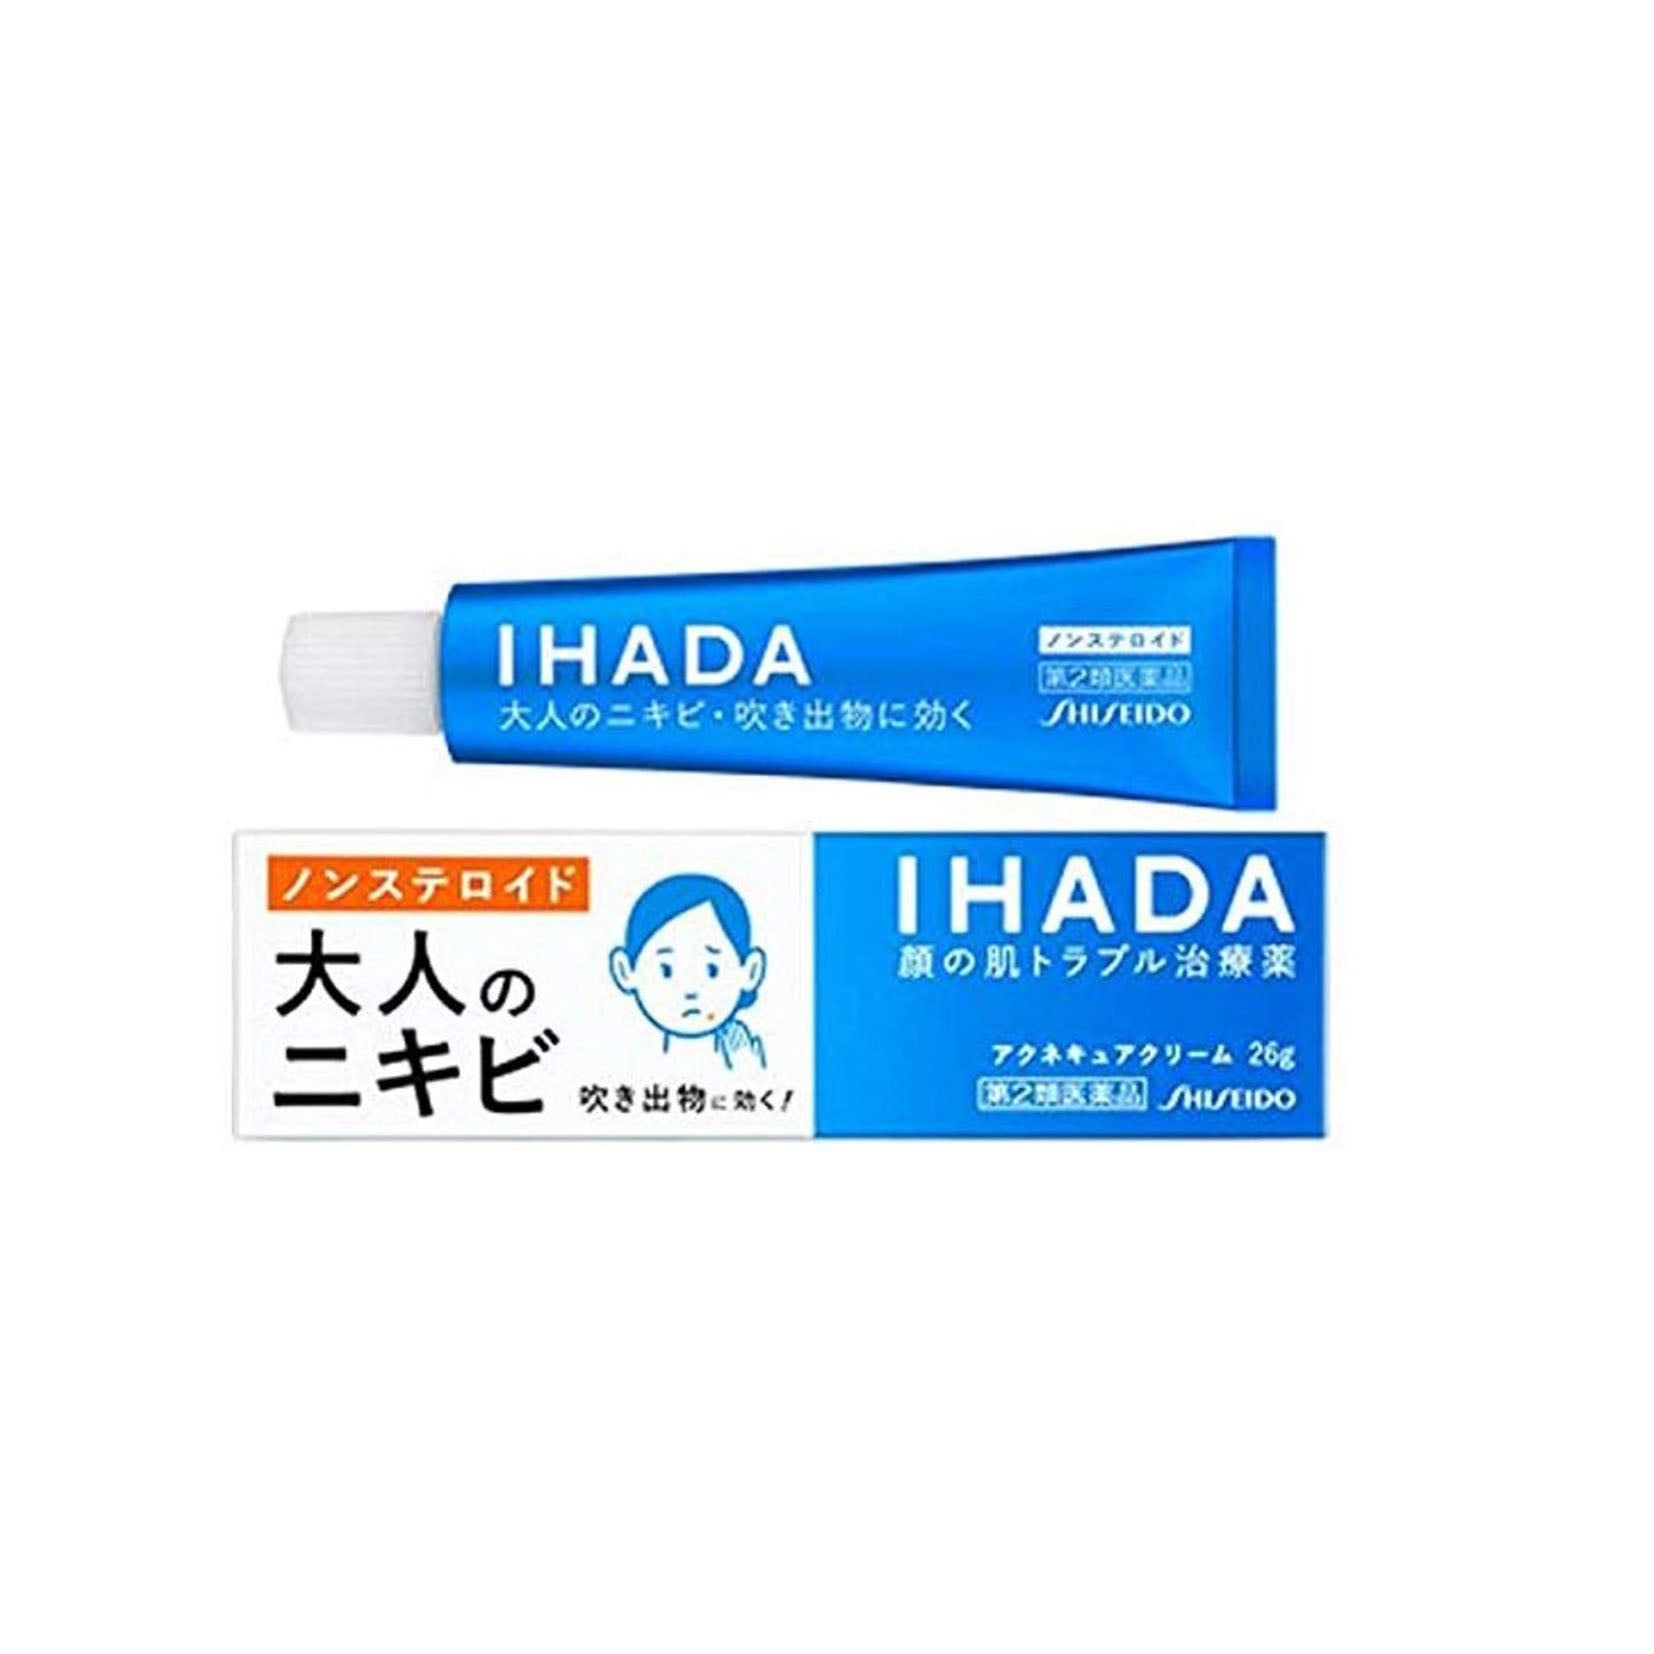 Shiseido IHADA Medicinal Acne Cure Cream - Harajuku Culture Japan - Japanease Products Store Beauty and Stationery